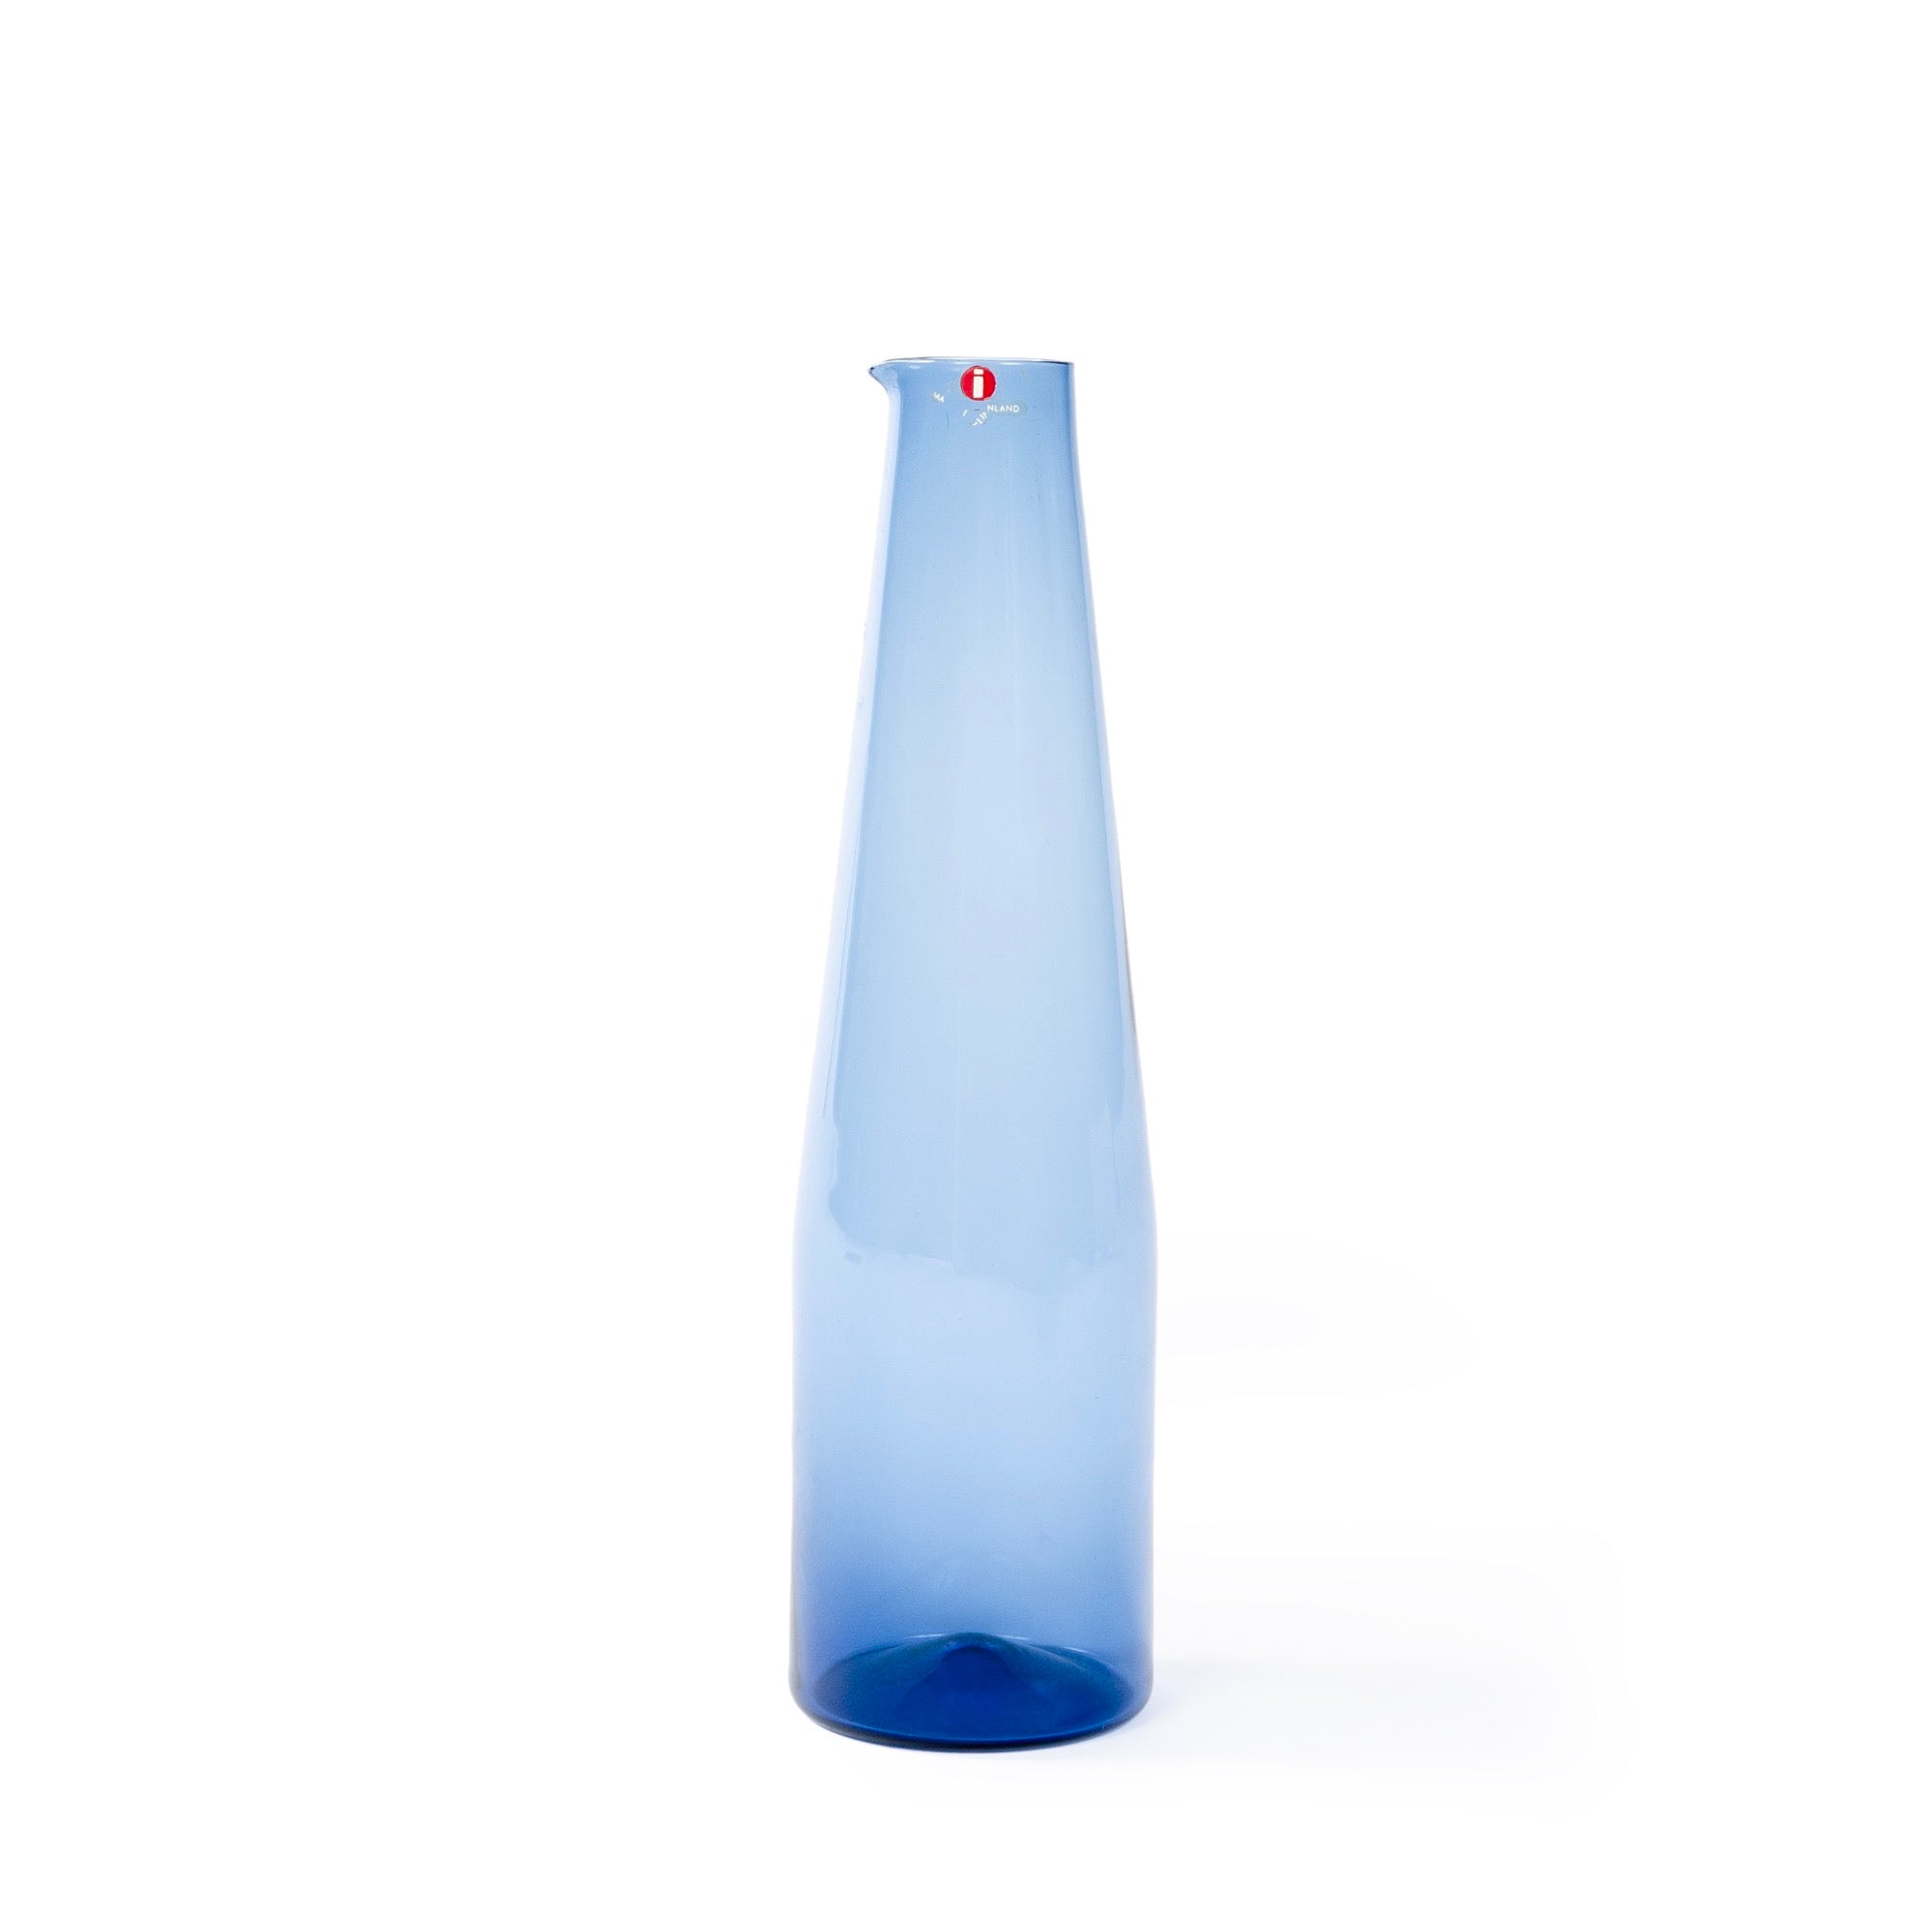 Blue Vase by Timo Sarpaneva for Iittala